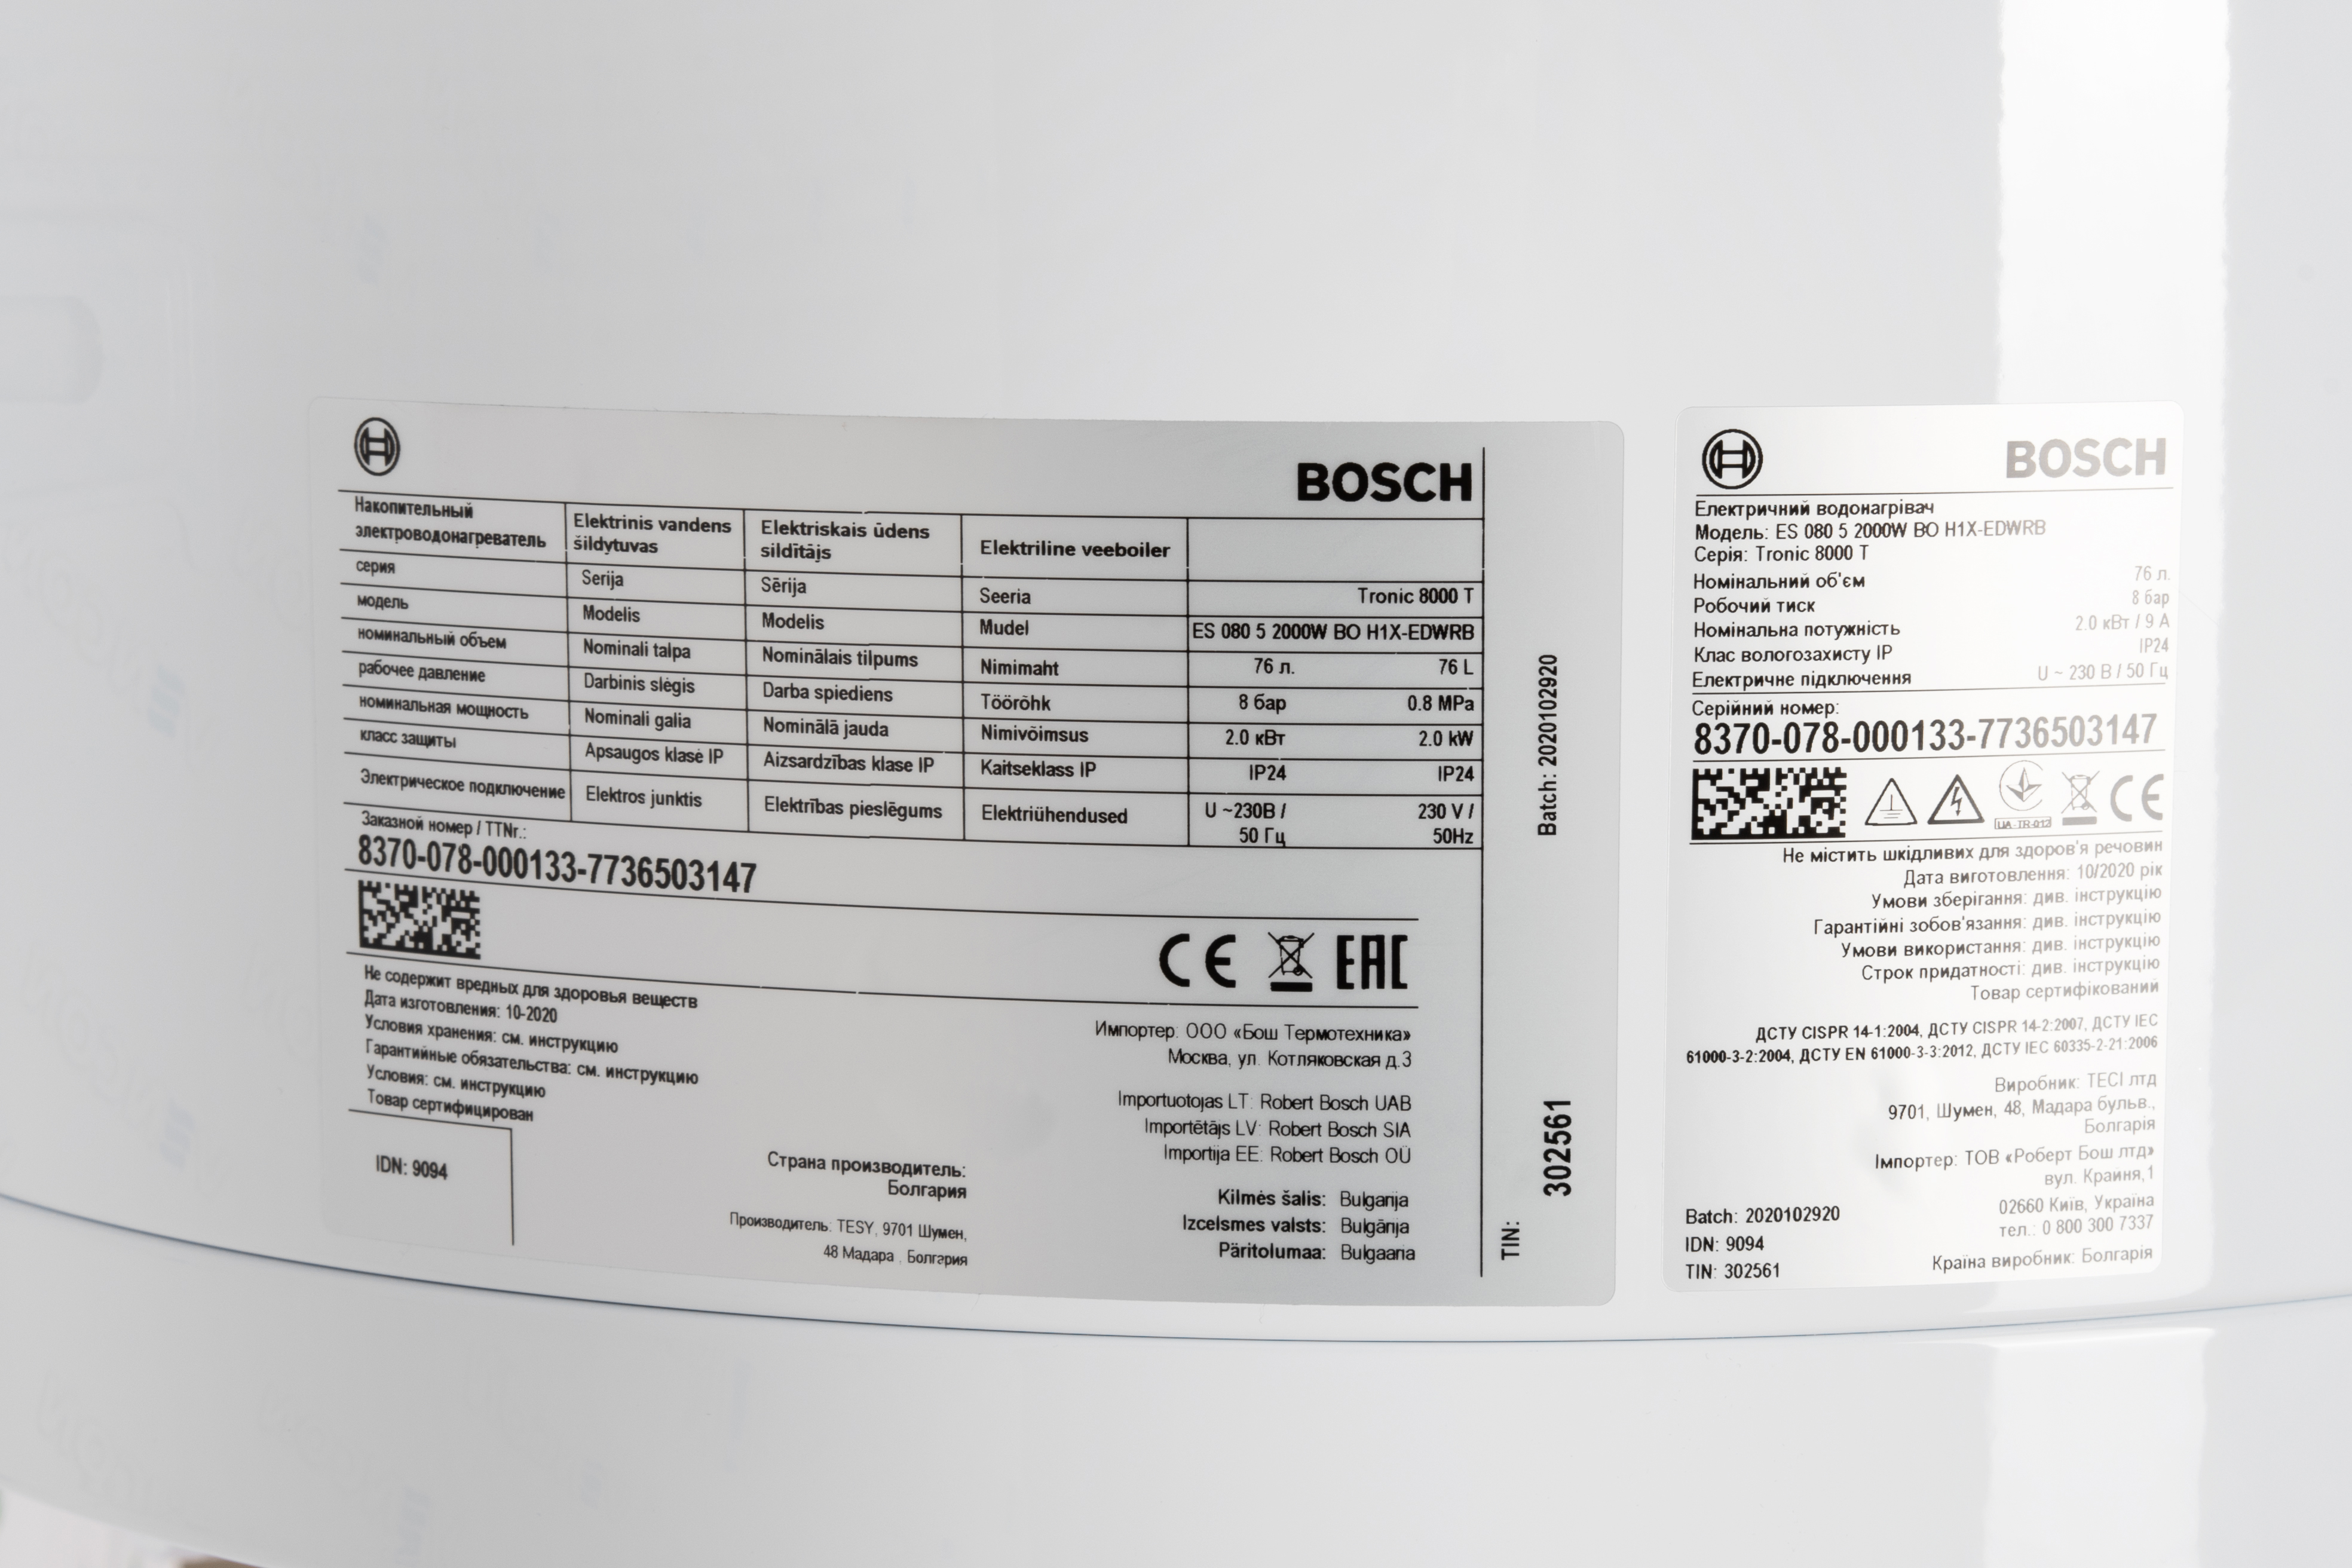 Бойлер Bosch Tronic 8000T ES 080-5 2000W BO H1X-EDWRB (7736503147) характеристики - фотография 7